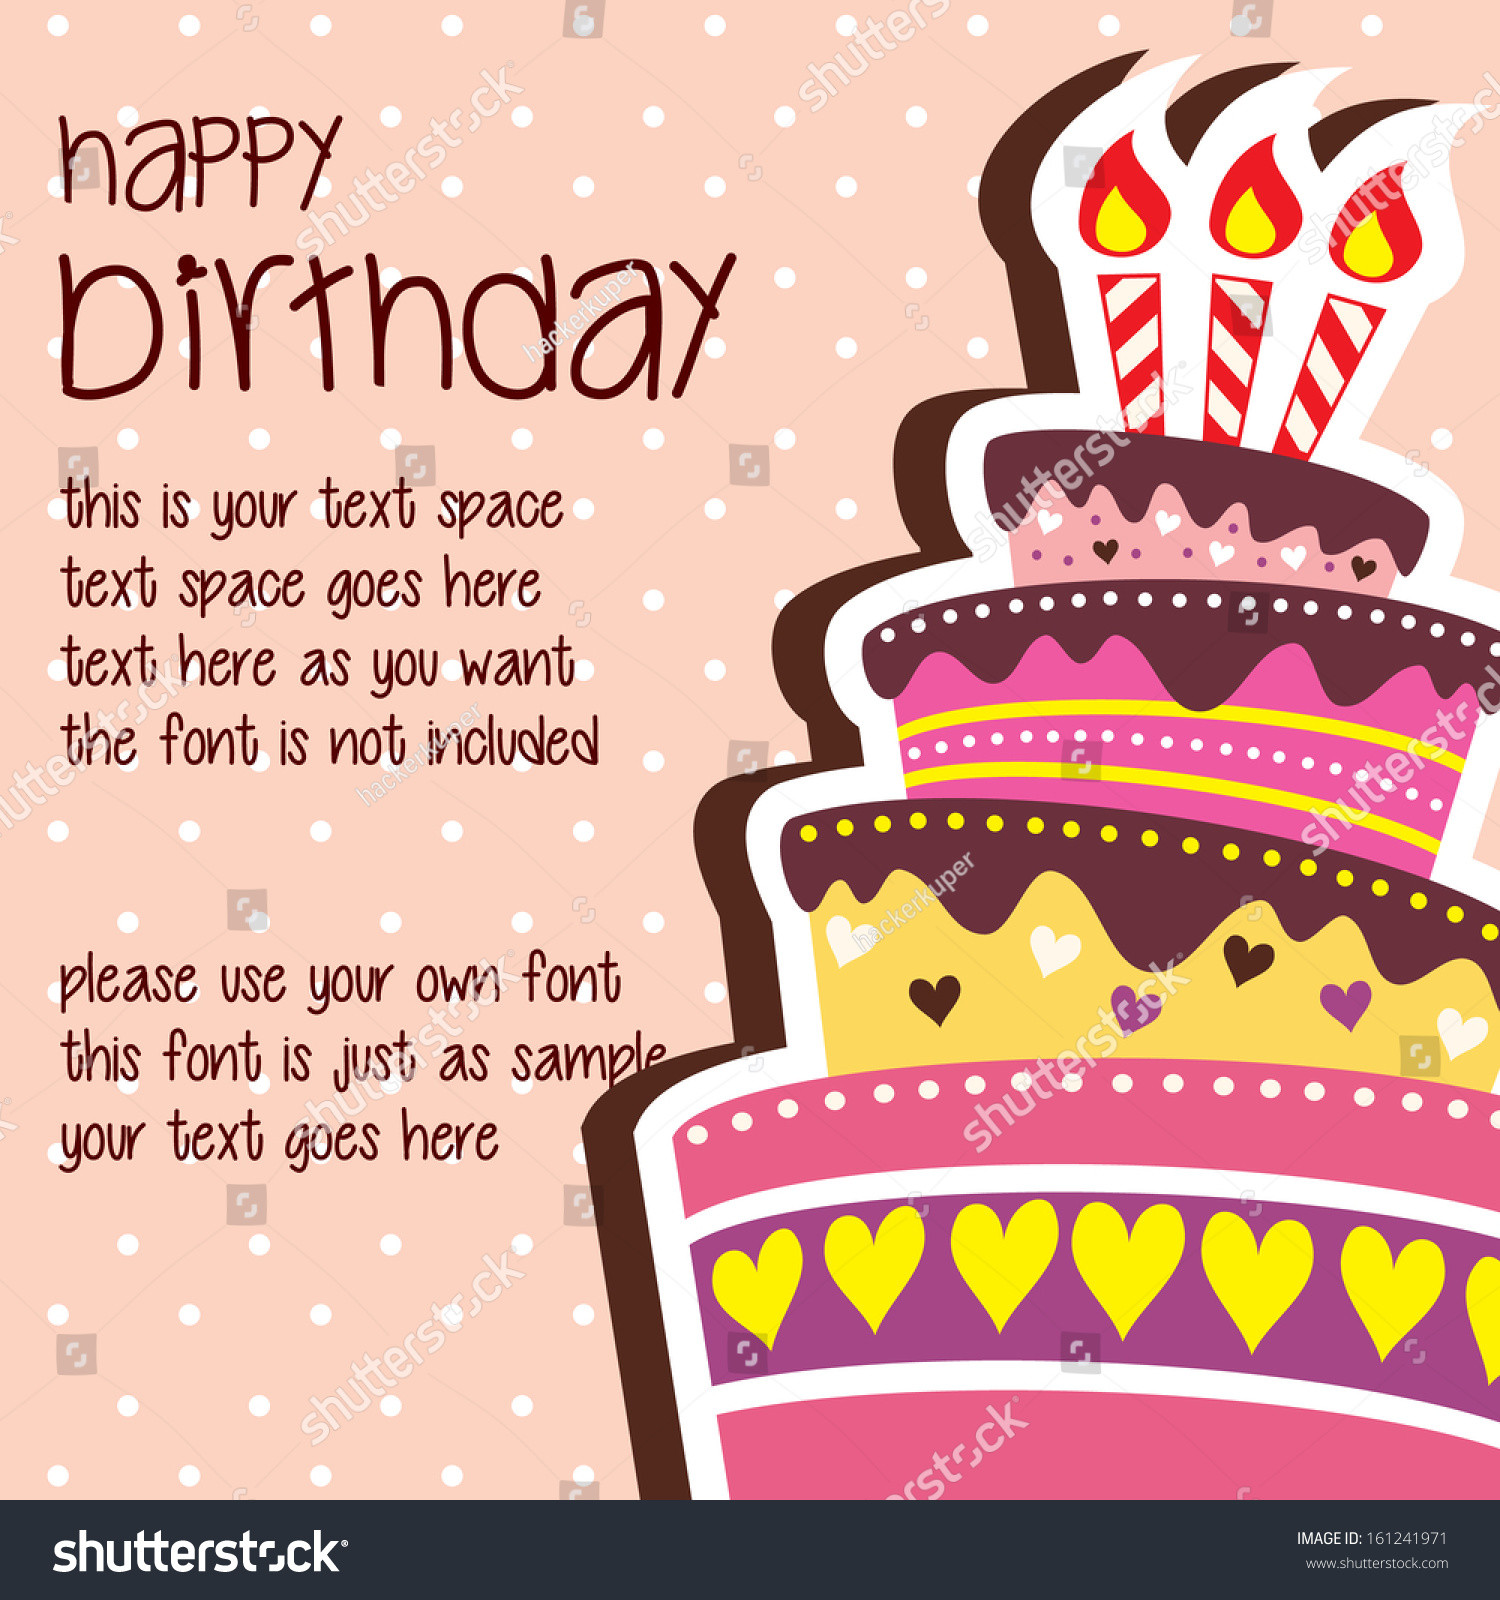 Happy Birthday Cake Text
 Happy Birthday Card Template Layered Stock Vector